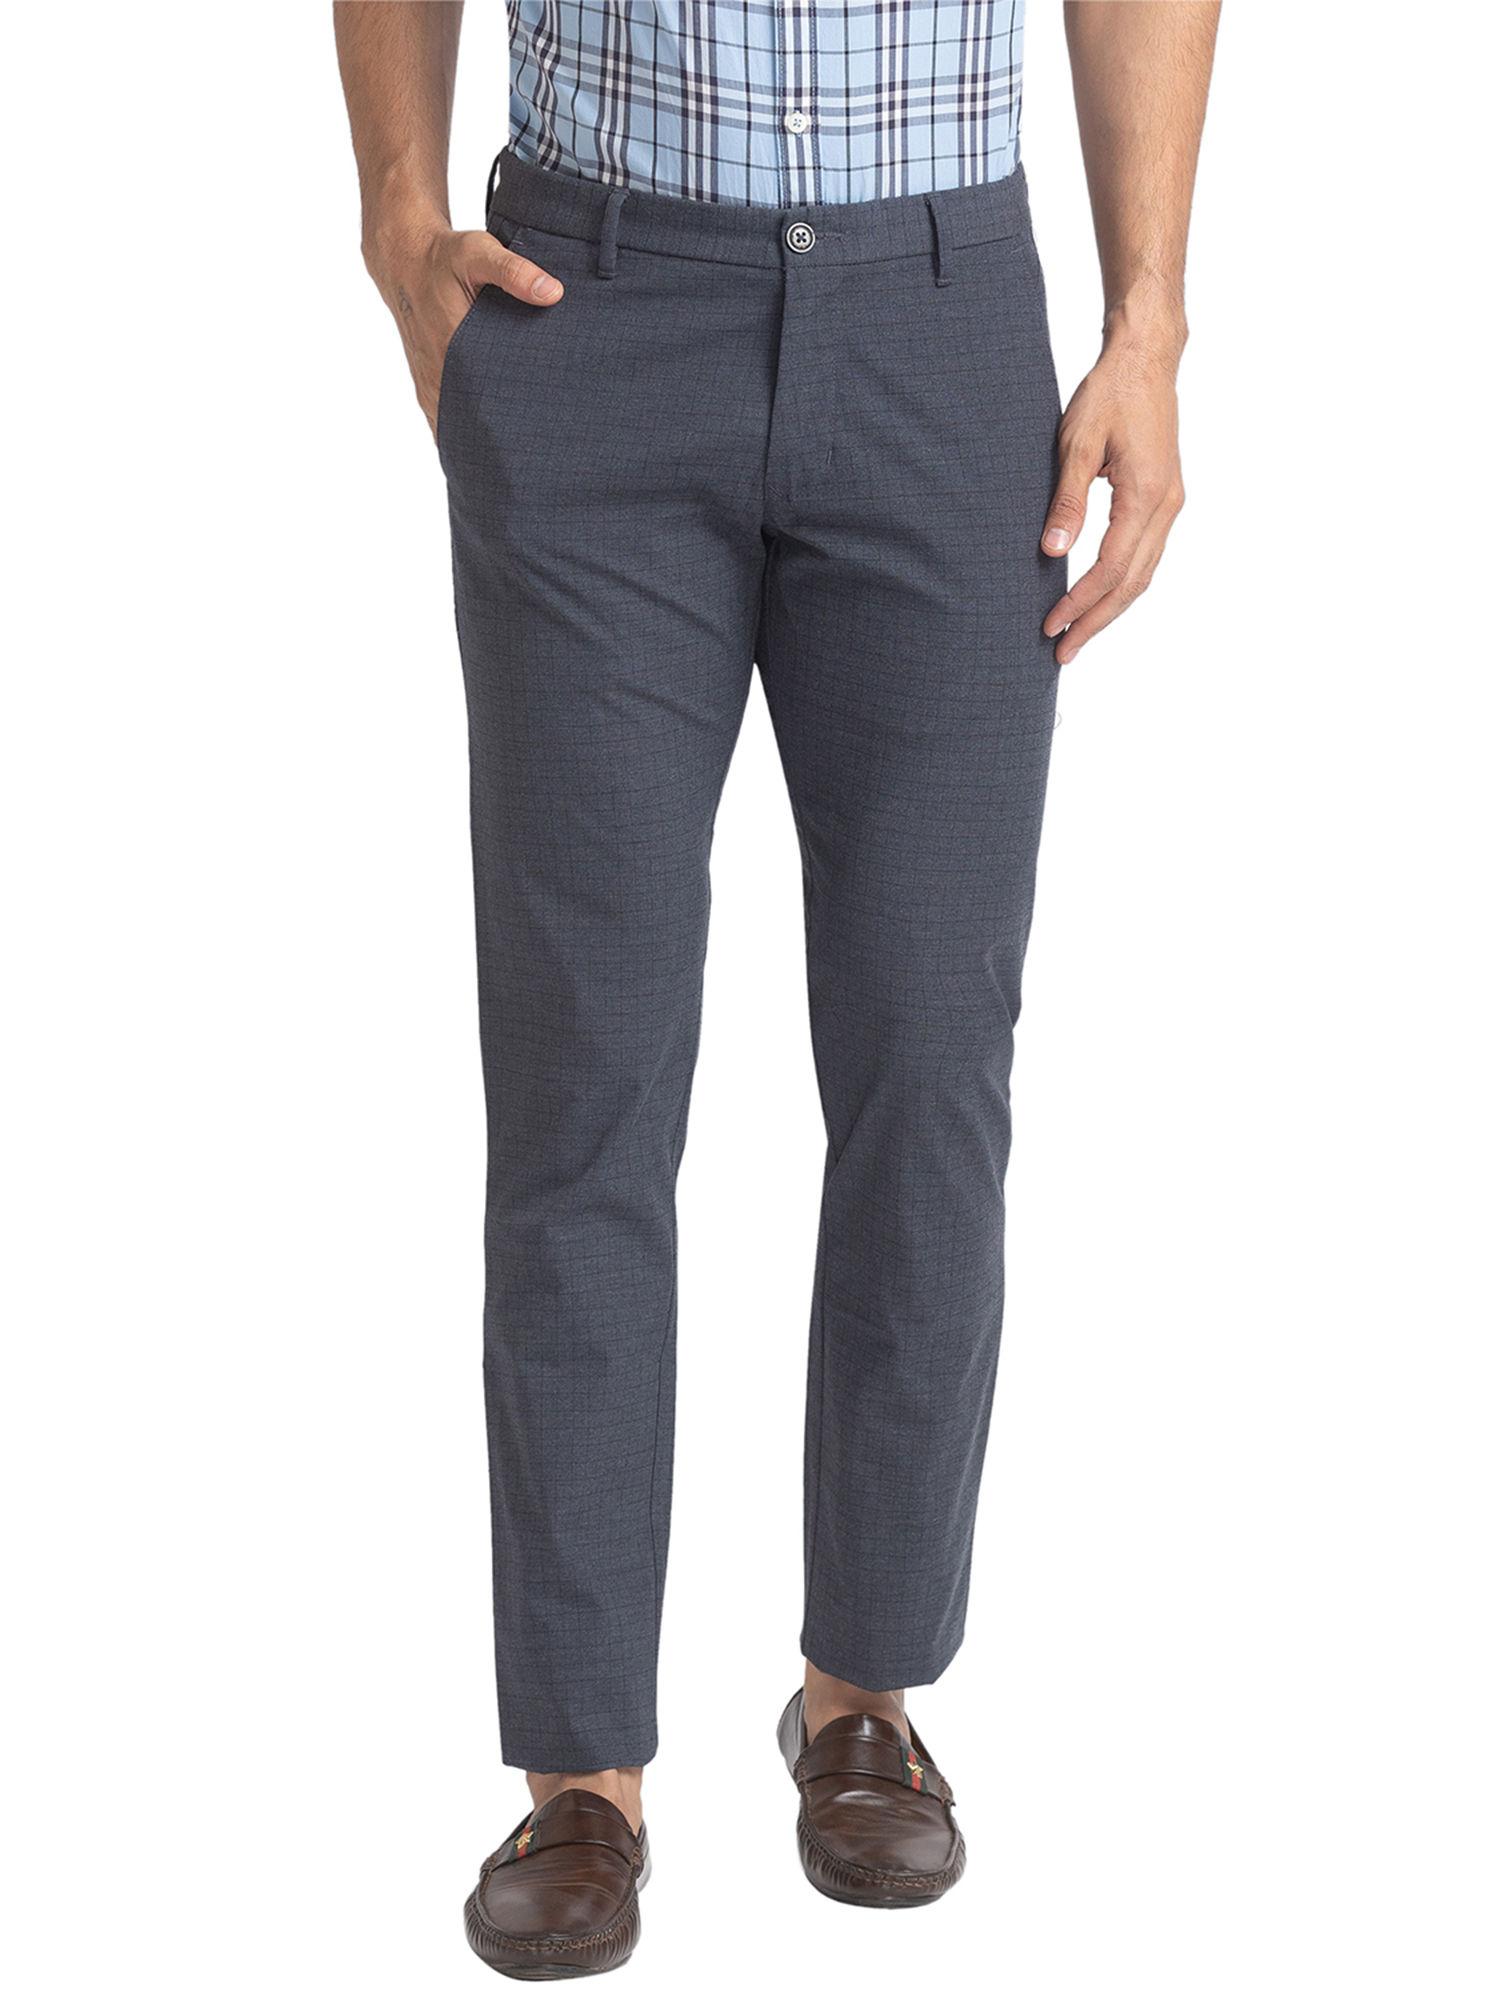 medium grey trouser